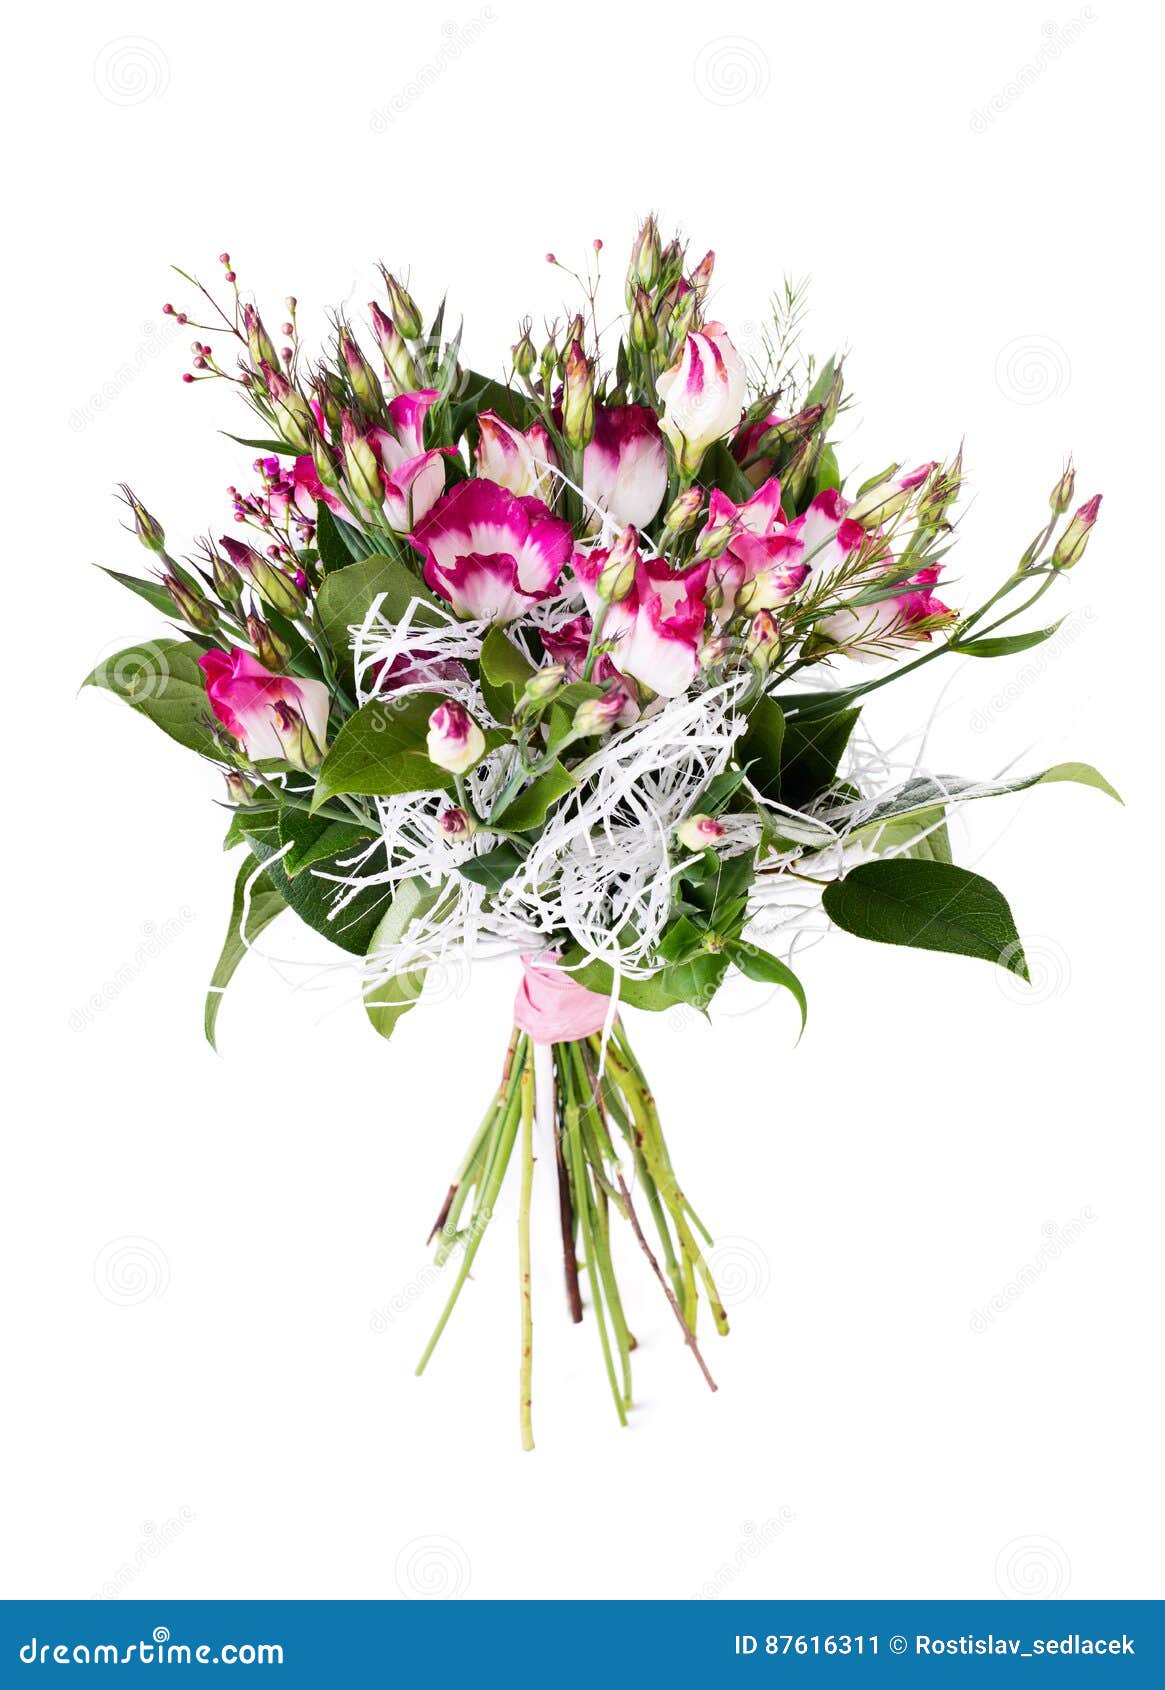 Pink Eustoma Flower Bouquet Arrangement Centerpiece Stock Image Image Of Design Background 87616311